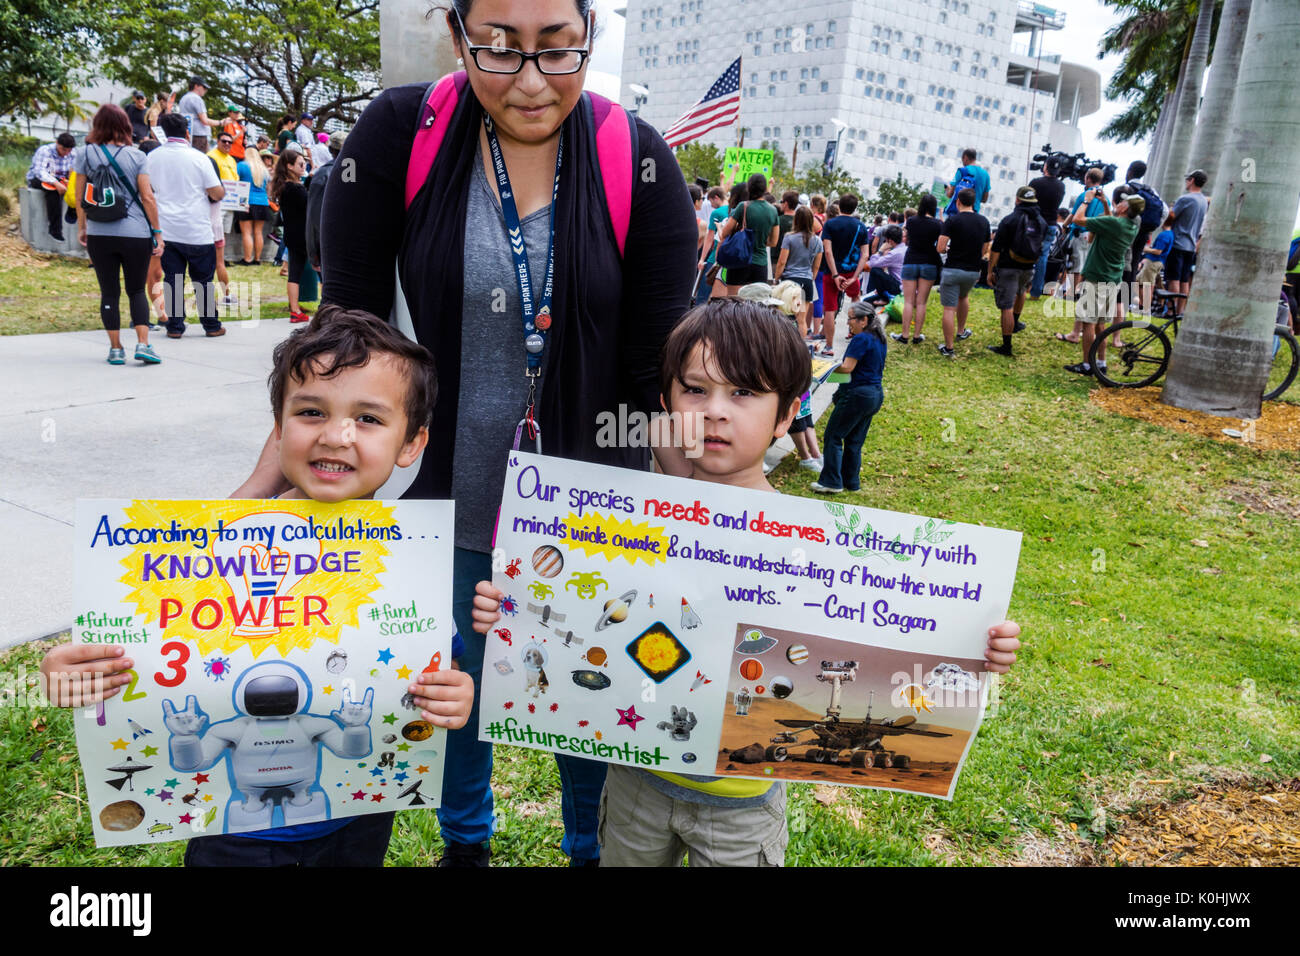 Miami Florida,Museum Park,March for Science,Protest,rallye,panneau,affiche,protester,femme hispanique femmes,garçons,enfant enfant enfant enfants youn Banque D'Images